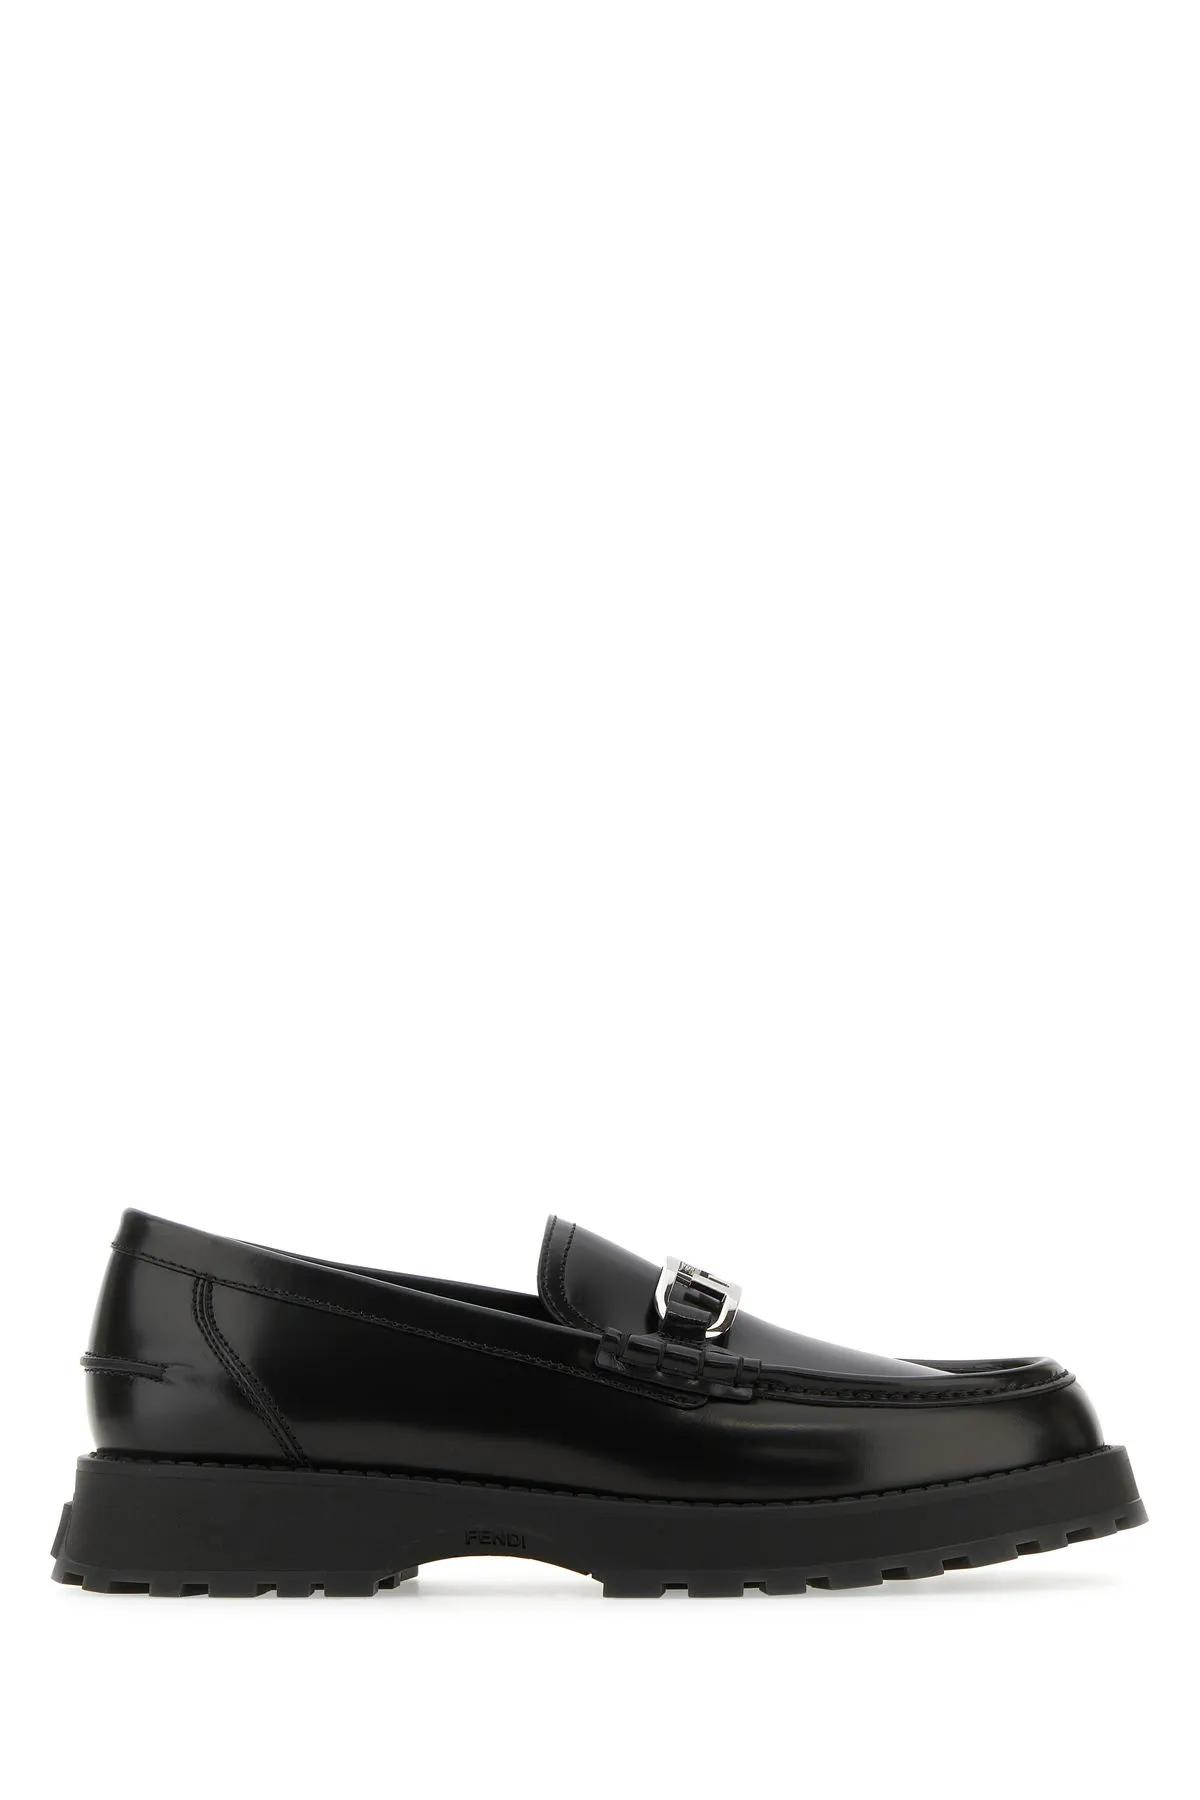 Shop Fendi Black Leather Oclock Loafers